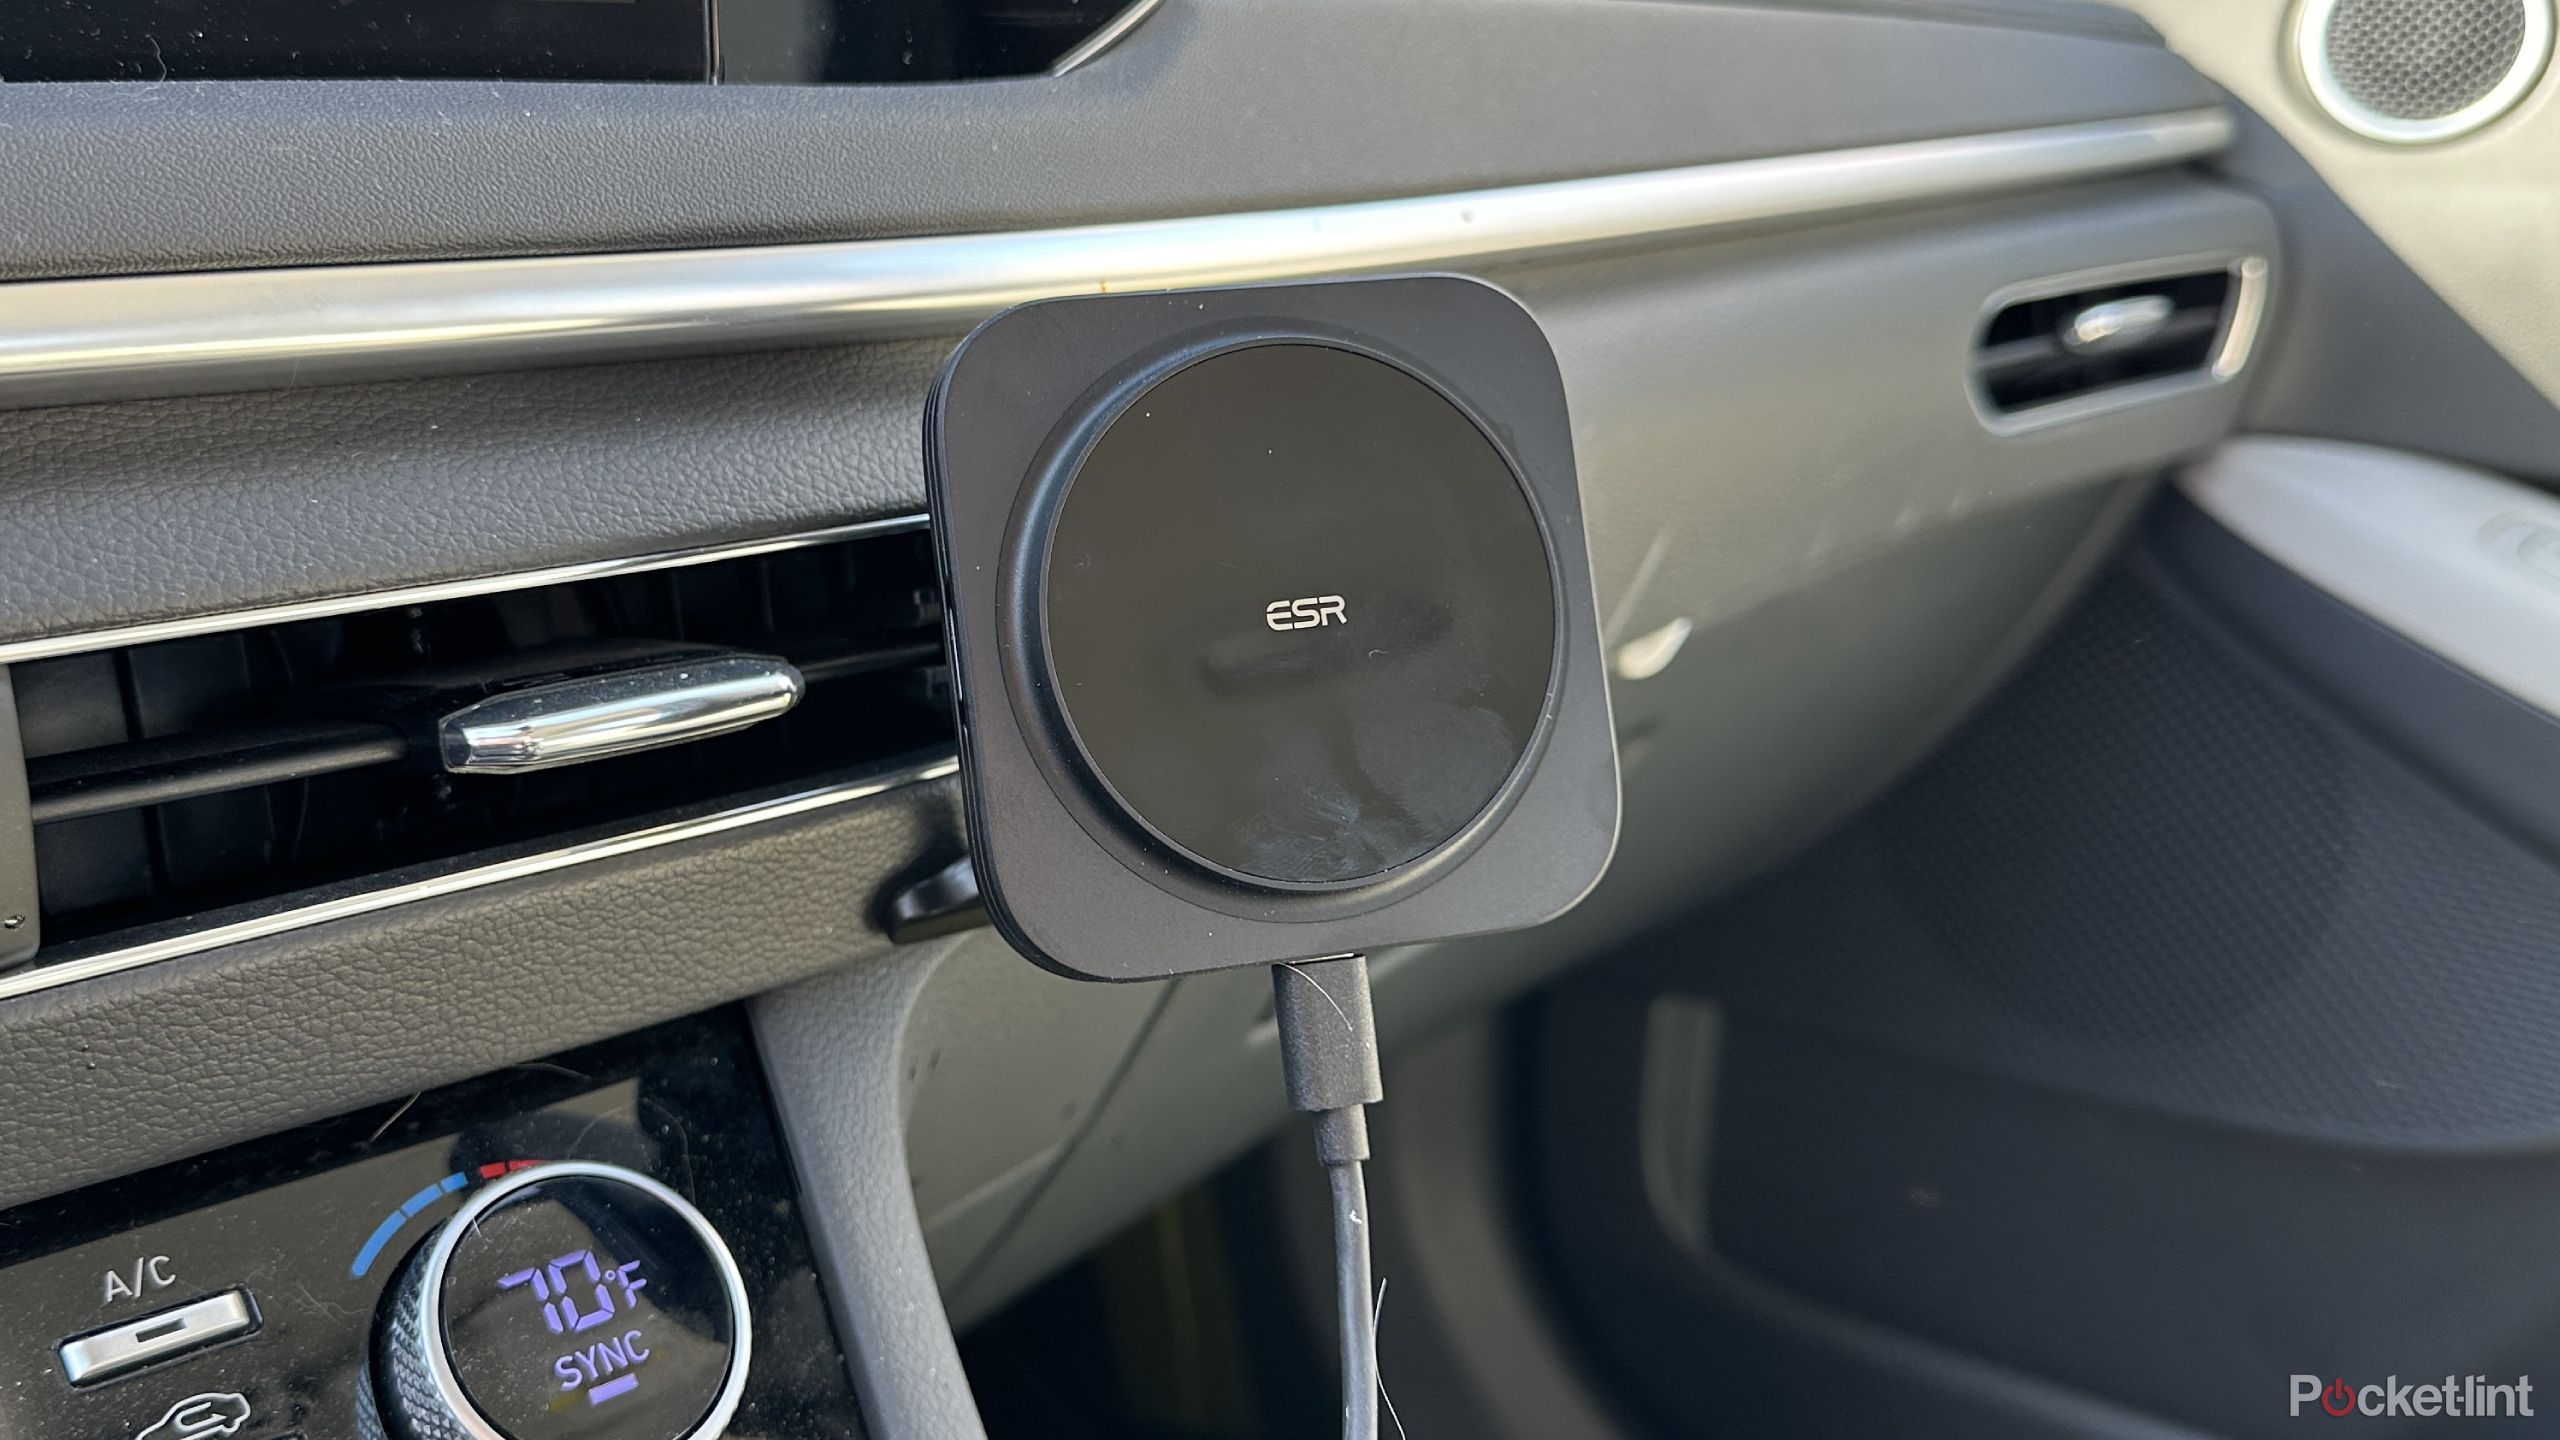 ESR Qi2 charger mount on dashboard